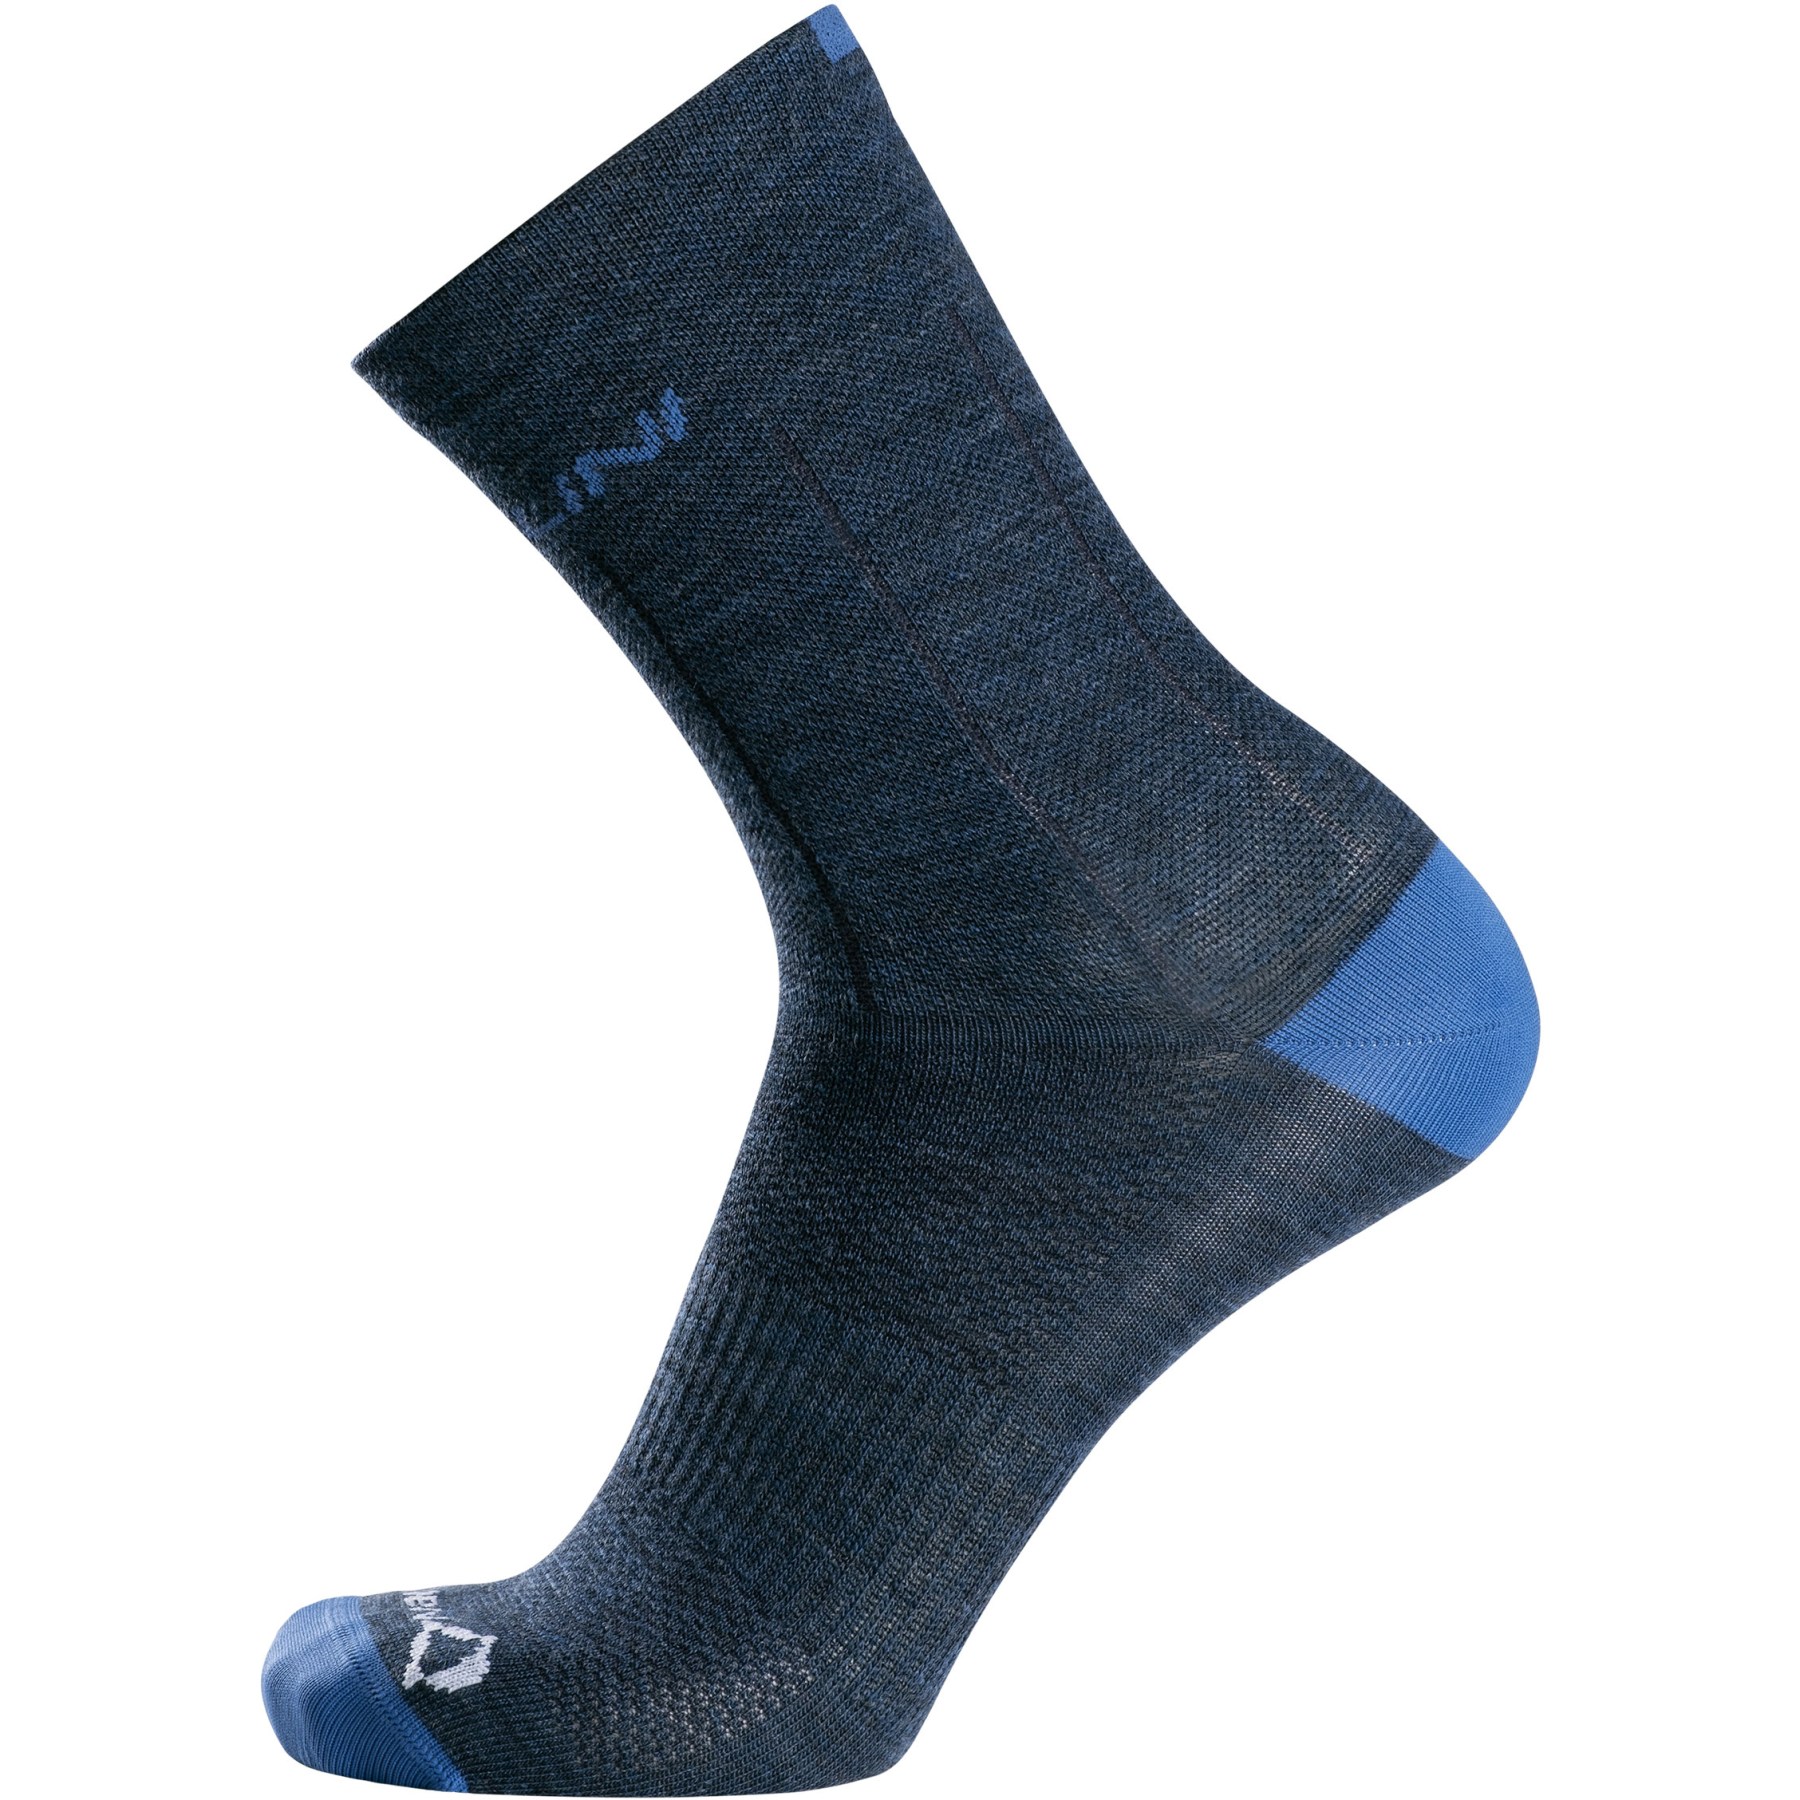 Productfoto van Nalini New Wool Socks - octanium blue 4020